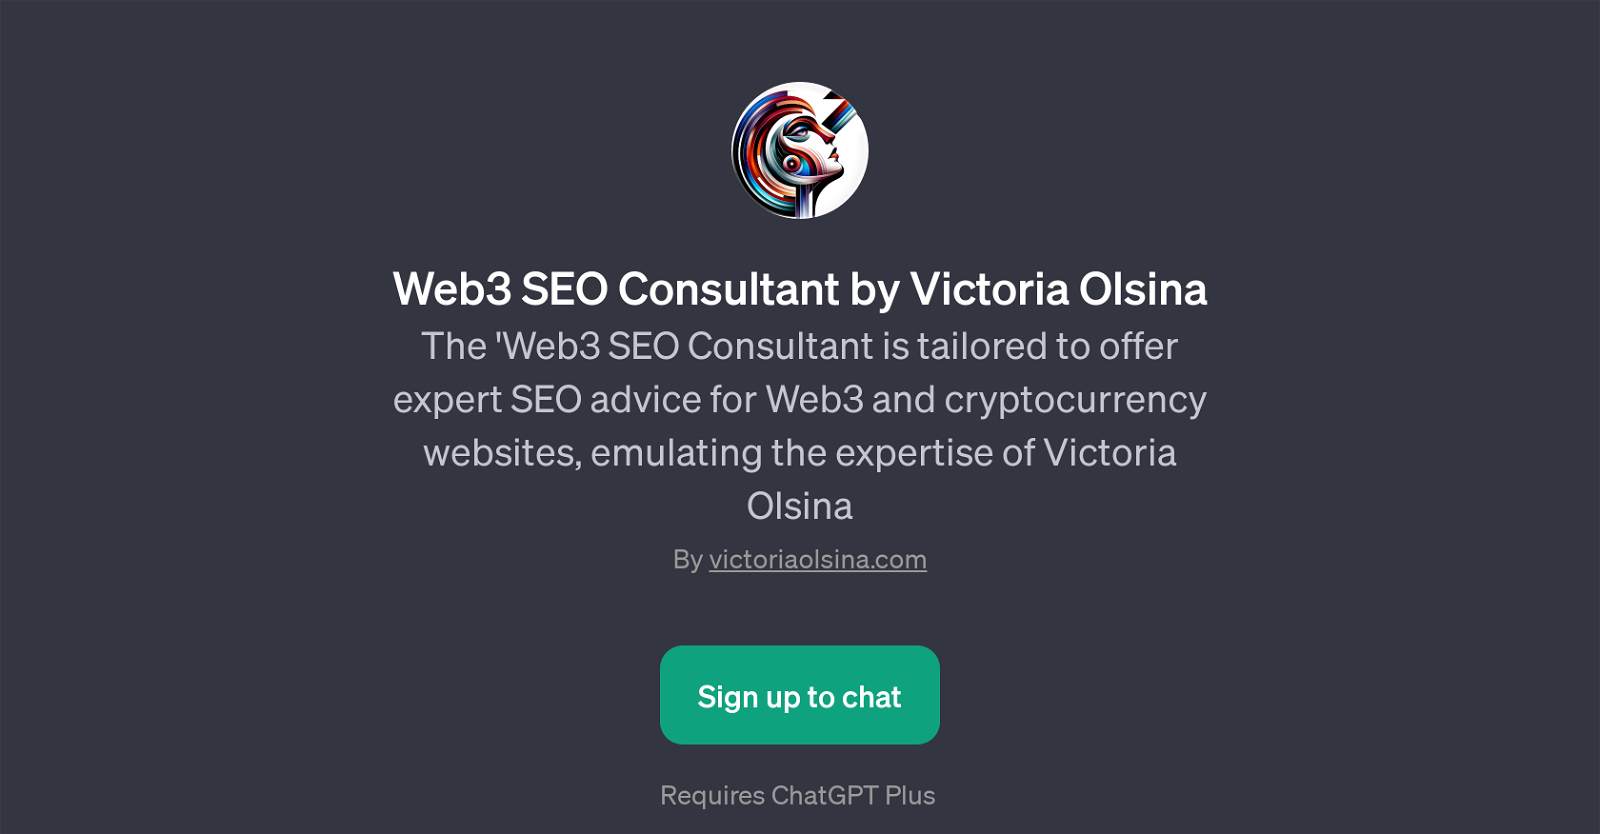 Web3 SEO Consultant by Victoria Olsina website